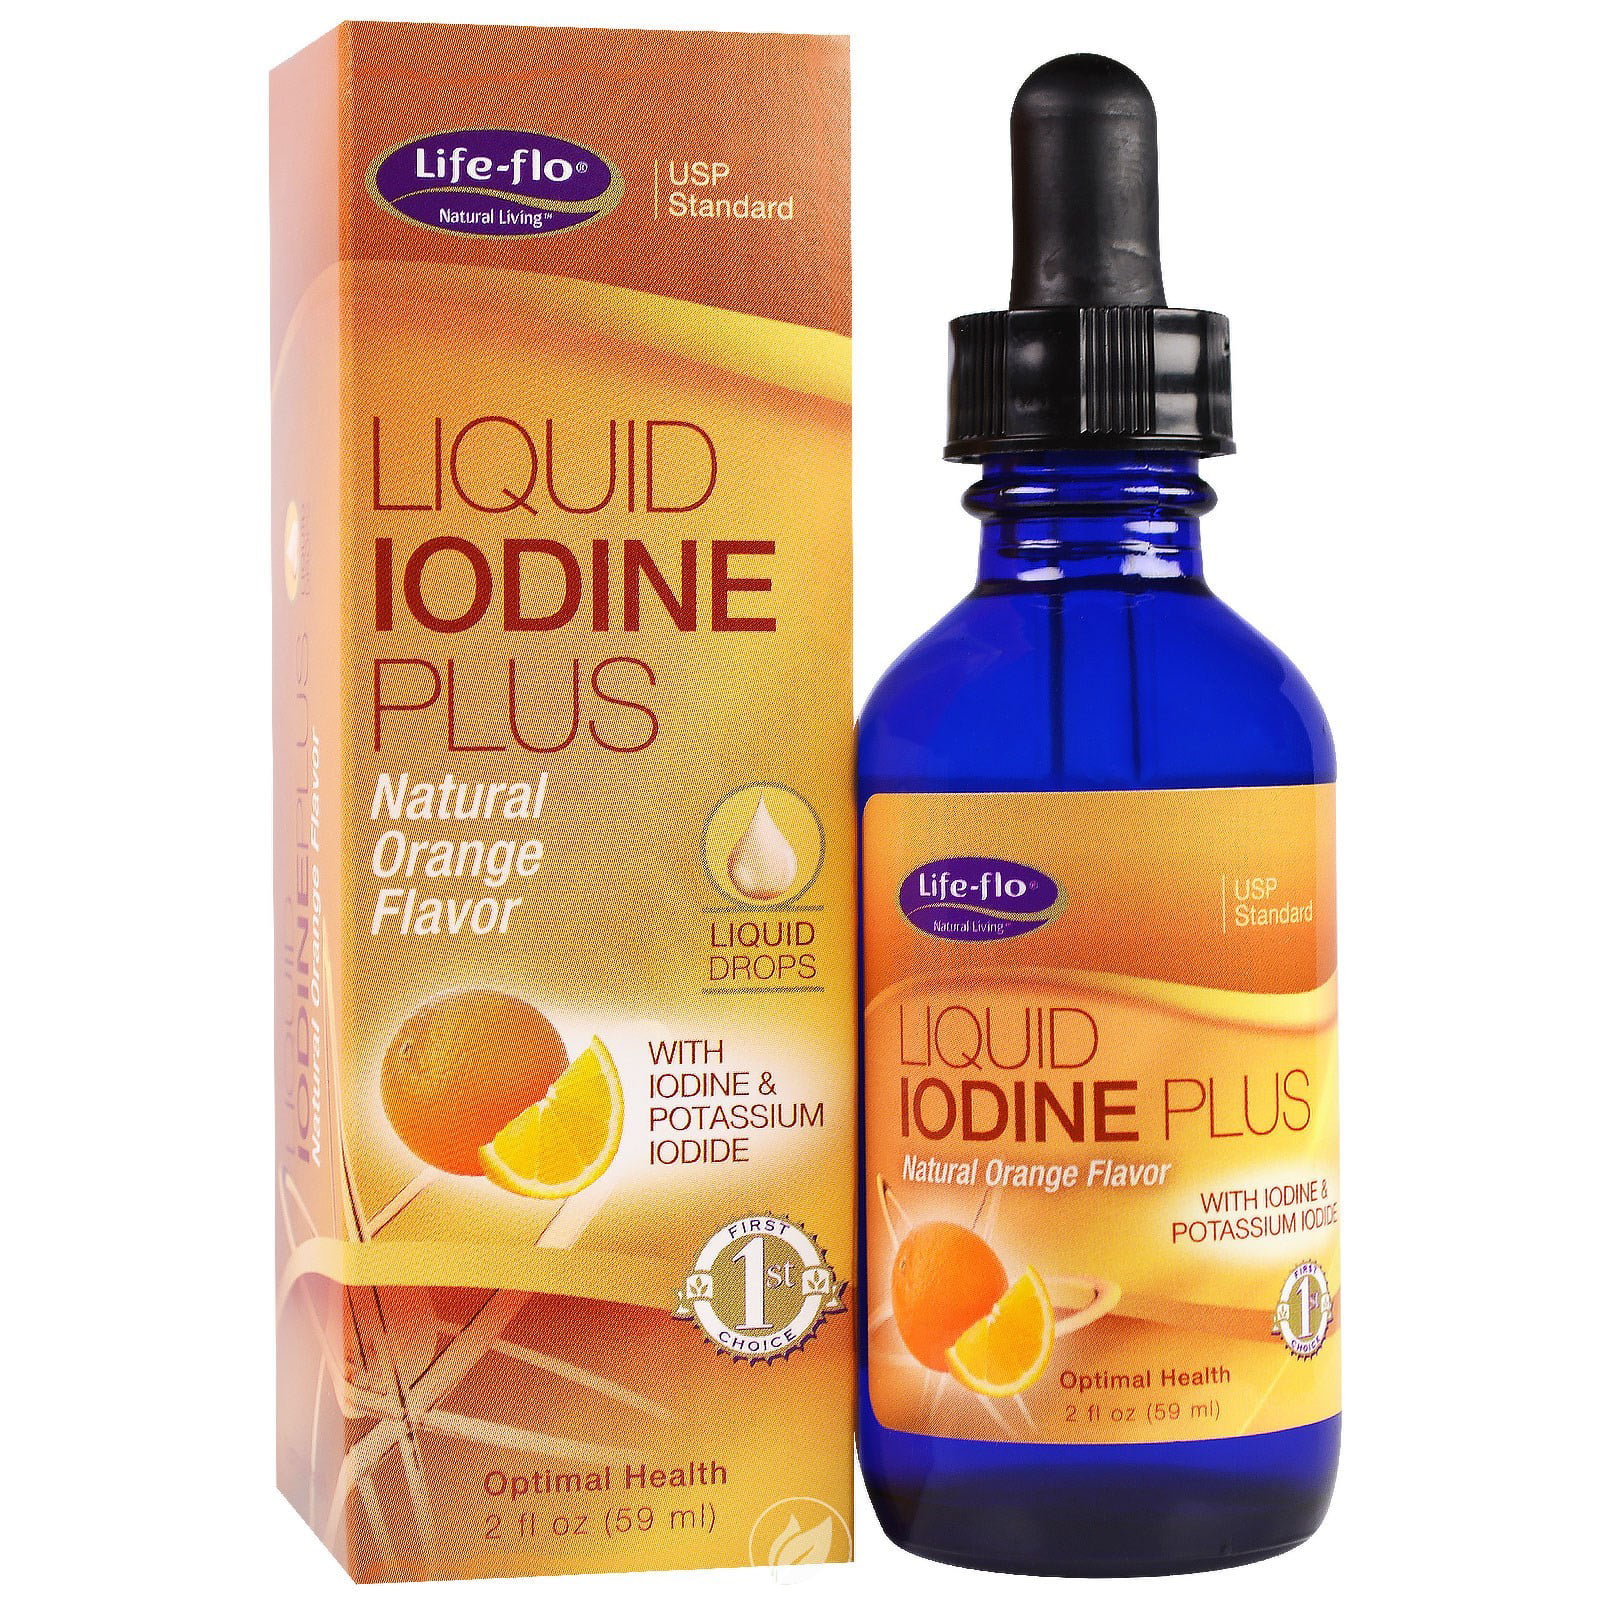 Liquid iodine supplements